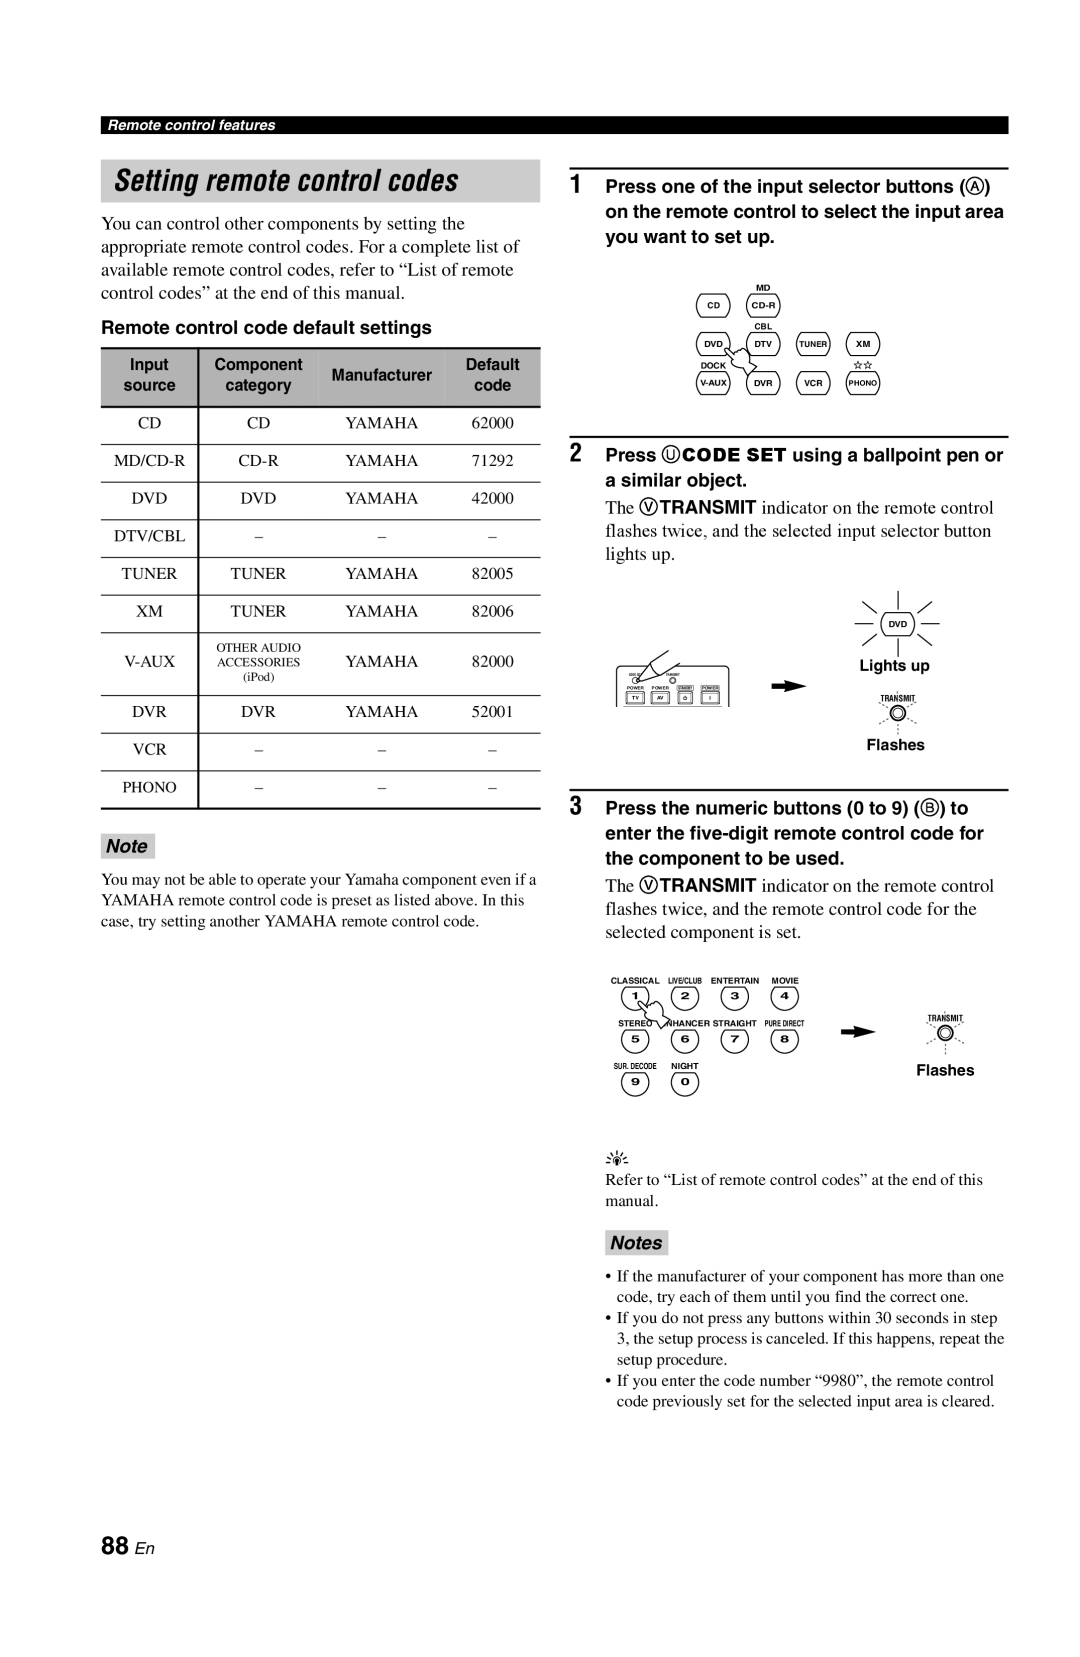 Yamaha RX-V861 owner manual Setting remote control codes, 88 En, Notes 